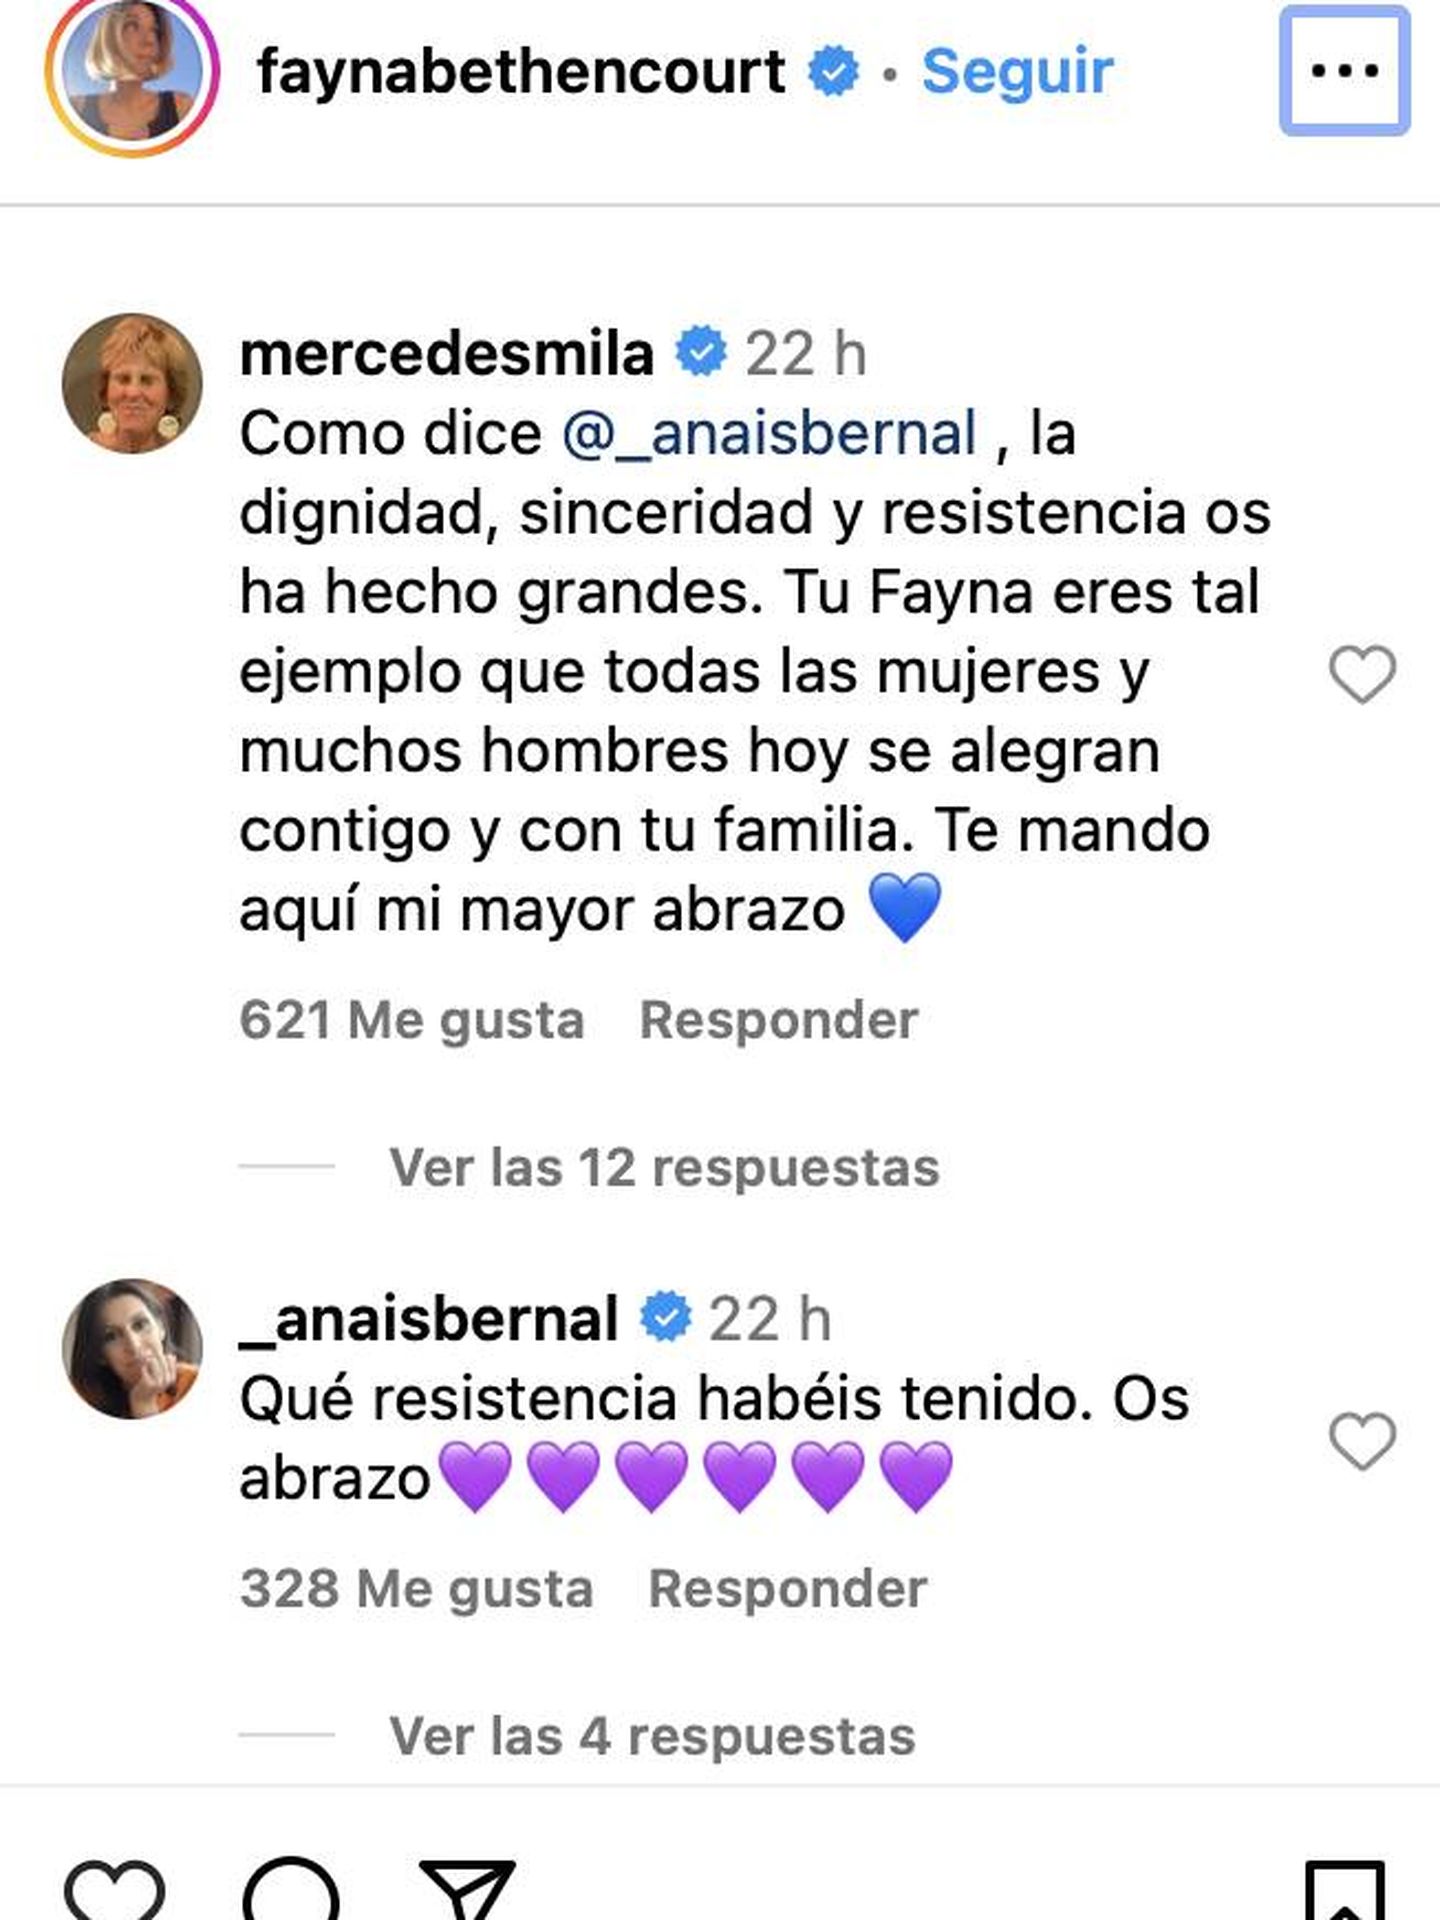 Mensaje de Mercedes Milá y Ana Bernal apoyando a Fayna Bethencourt (IG: @faynabethencourt)